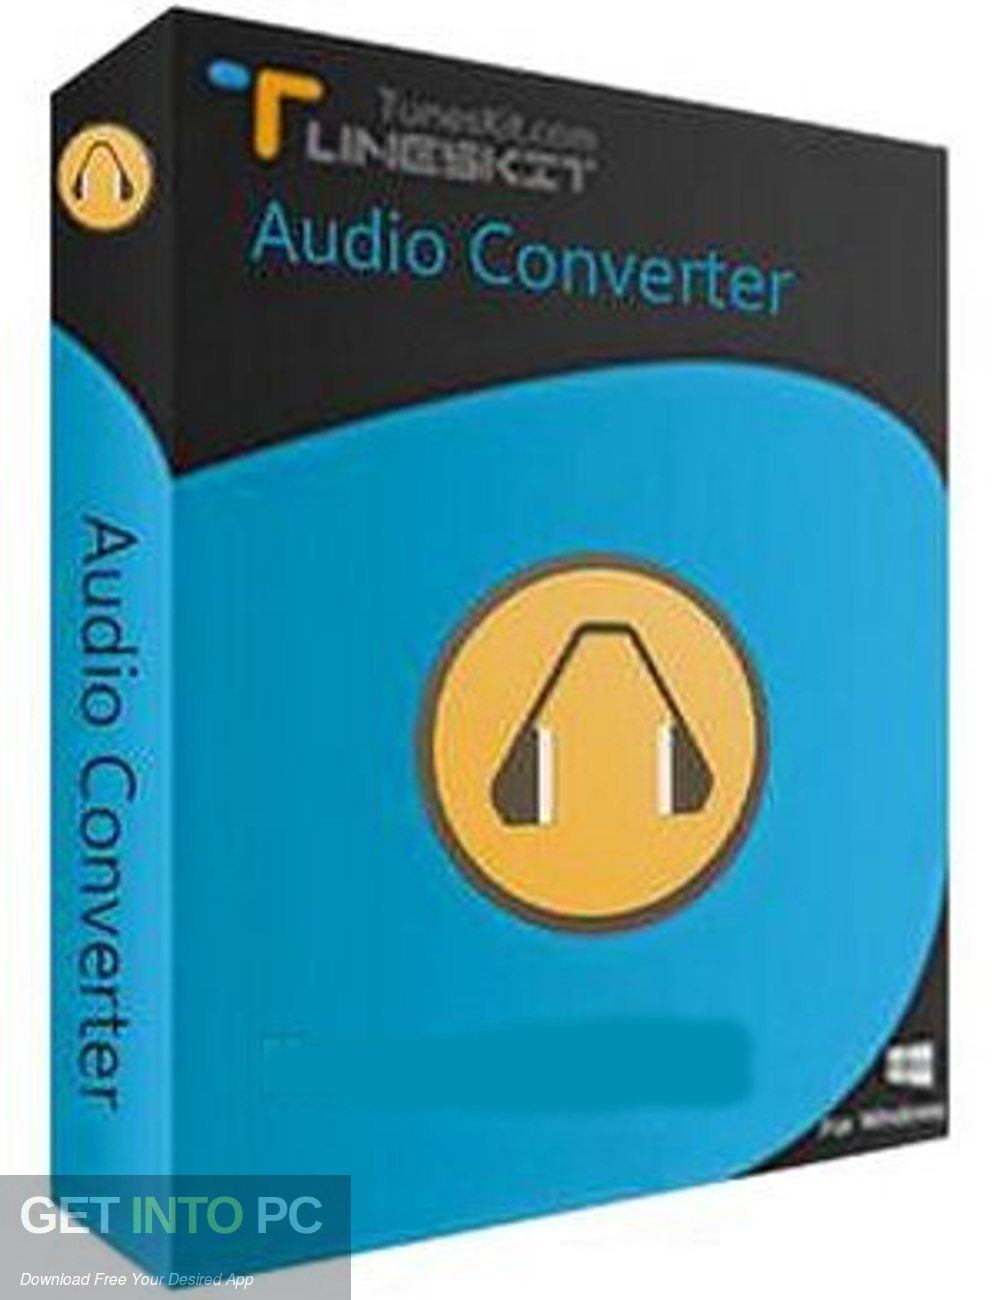 Картинки TUNESKIT Audio Converter.